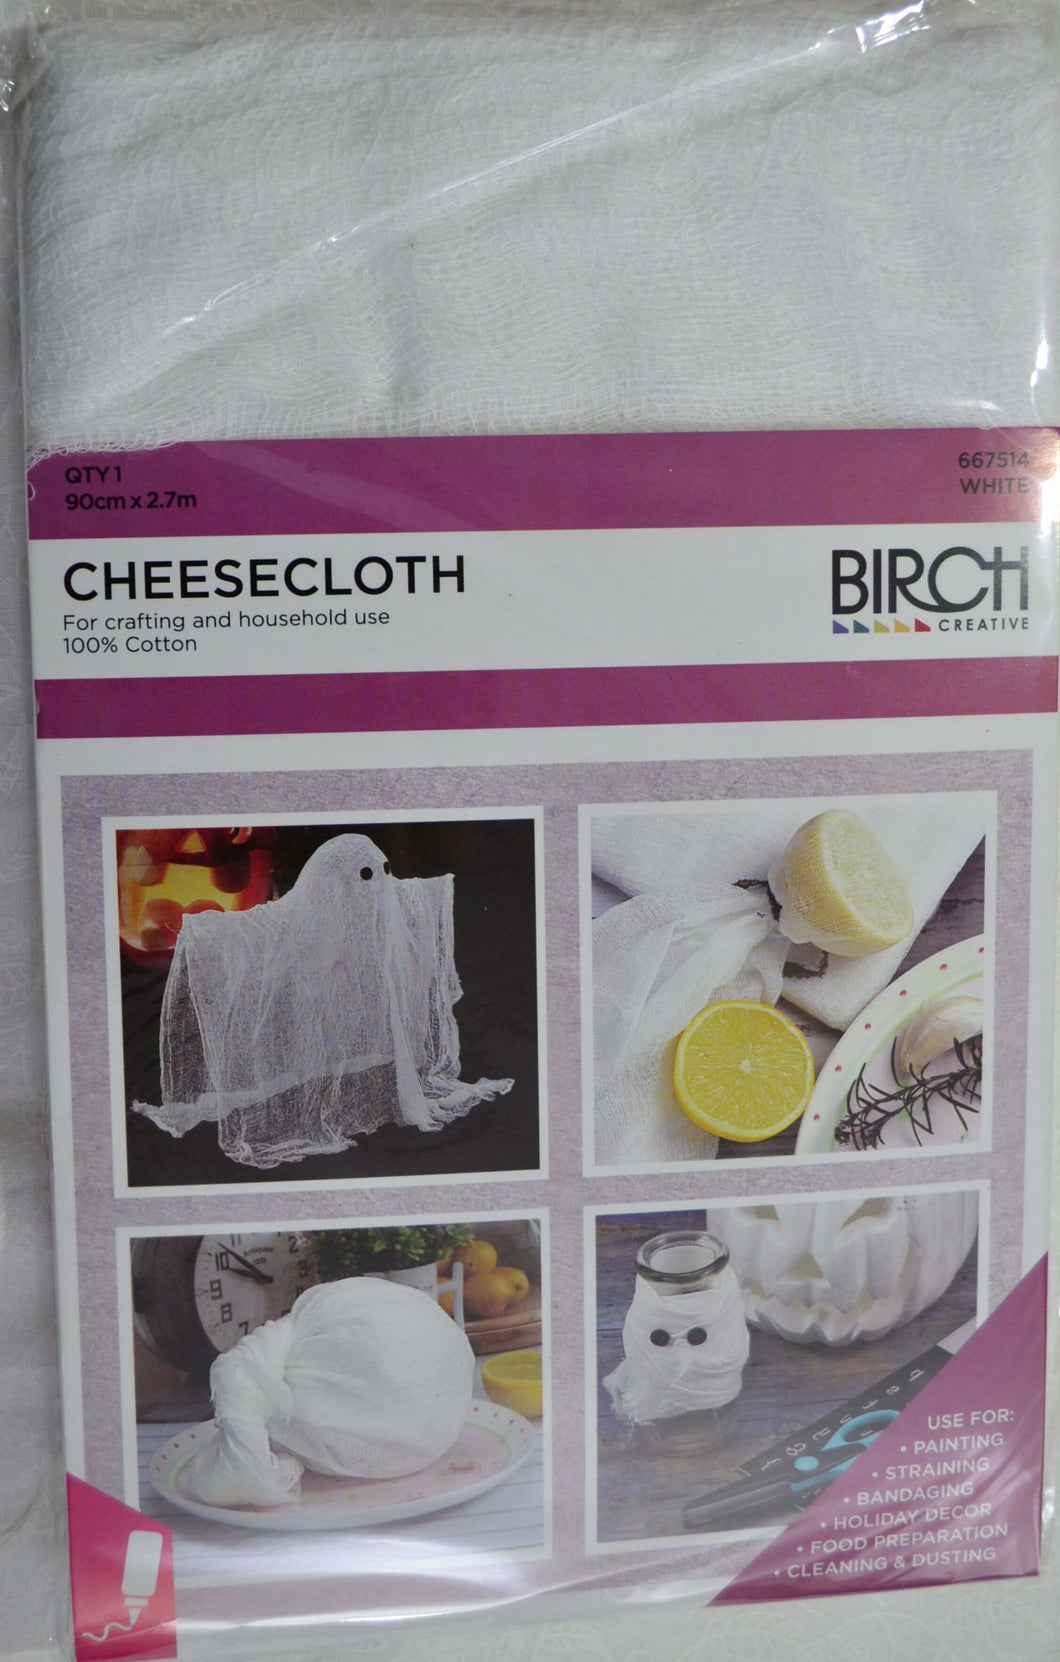 Birch Cheesecloth 90cm x 2.7m #667514